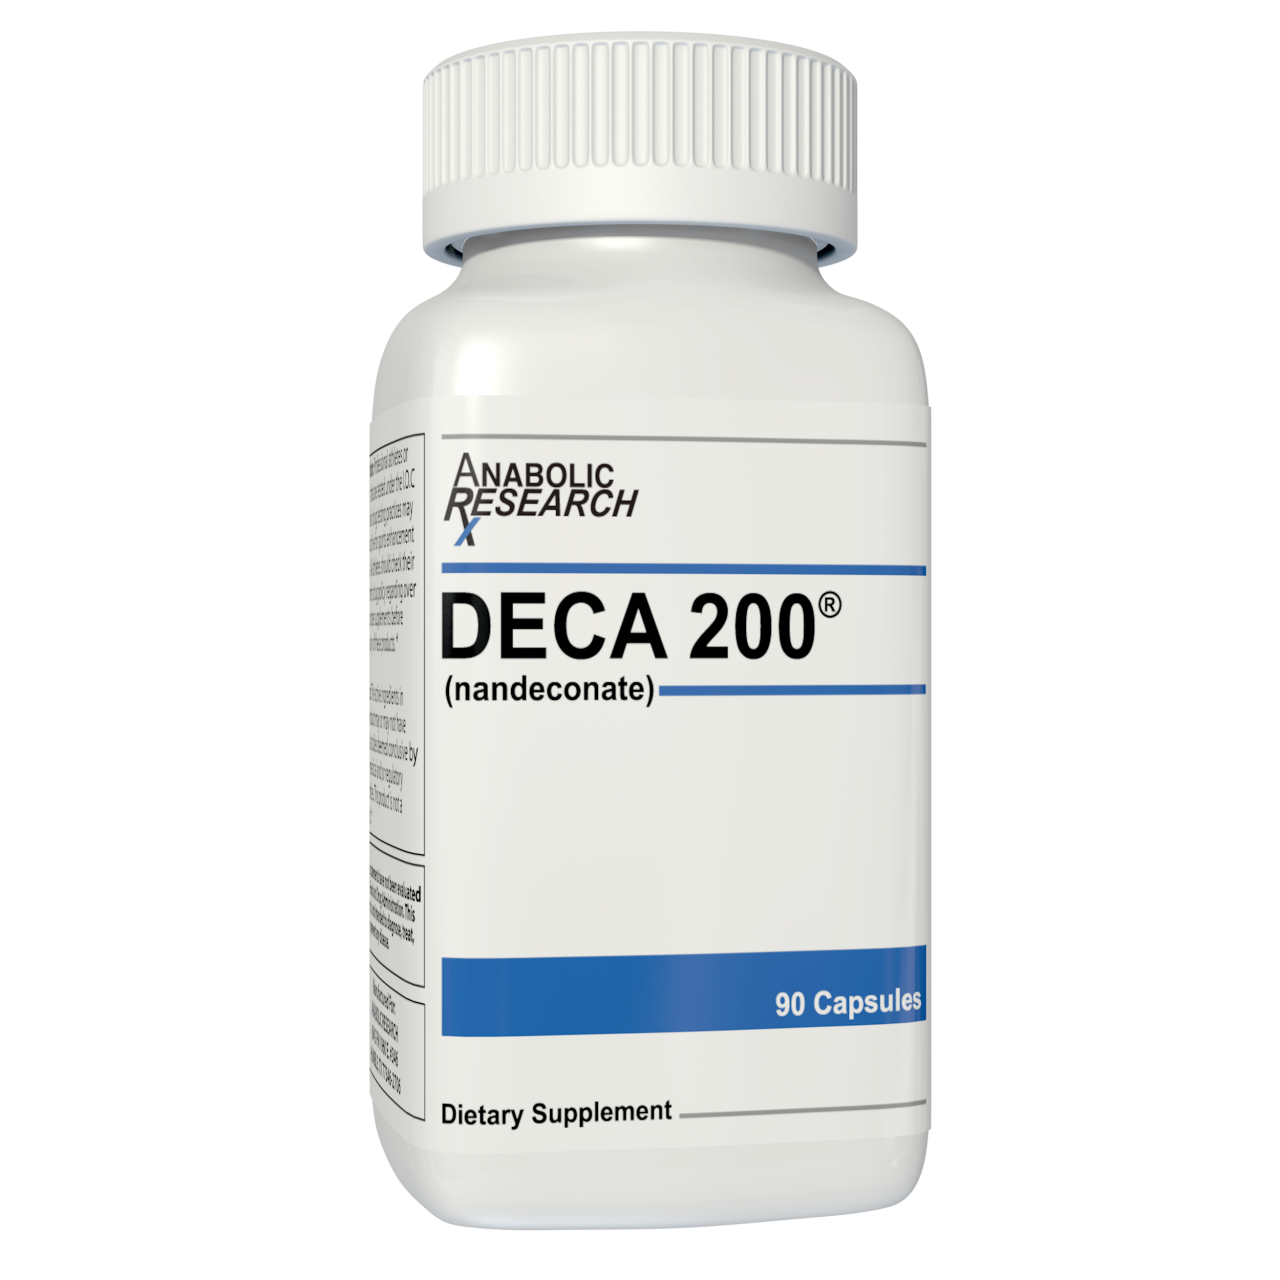 DECA 200